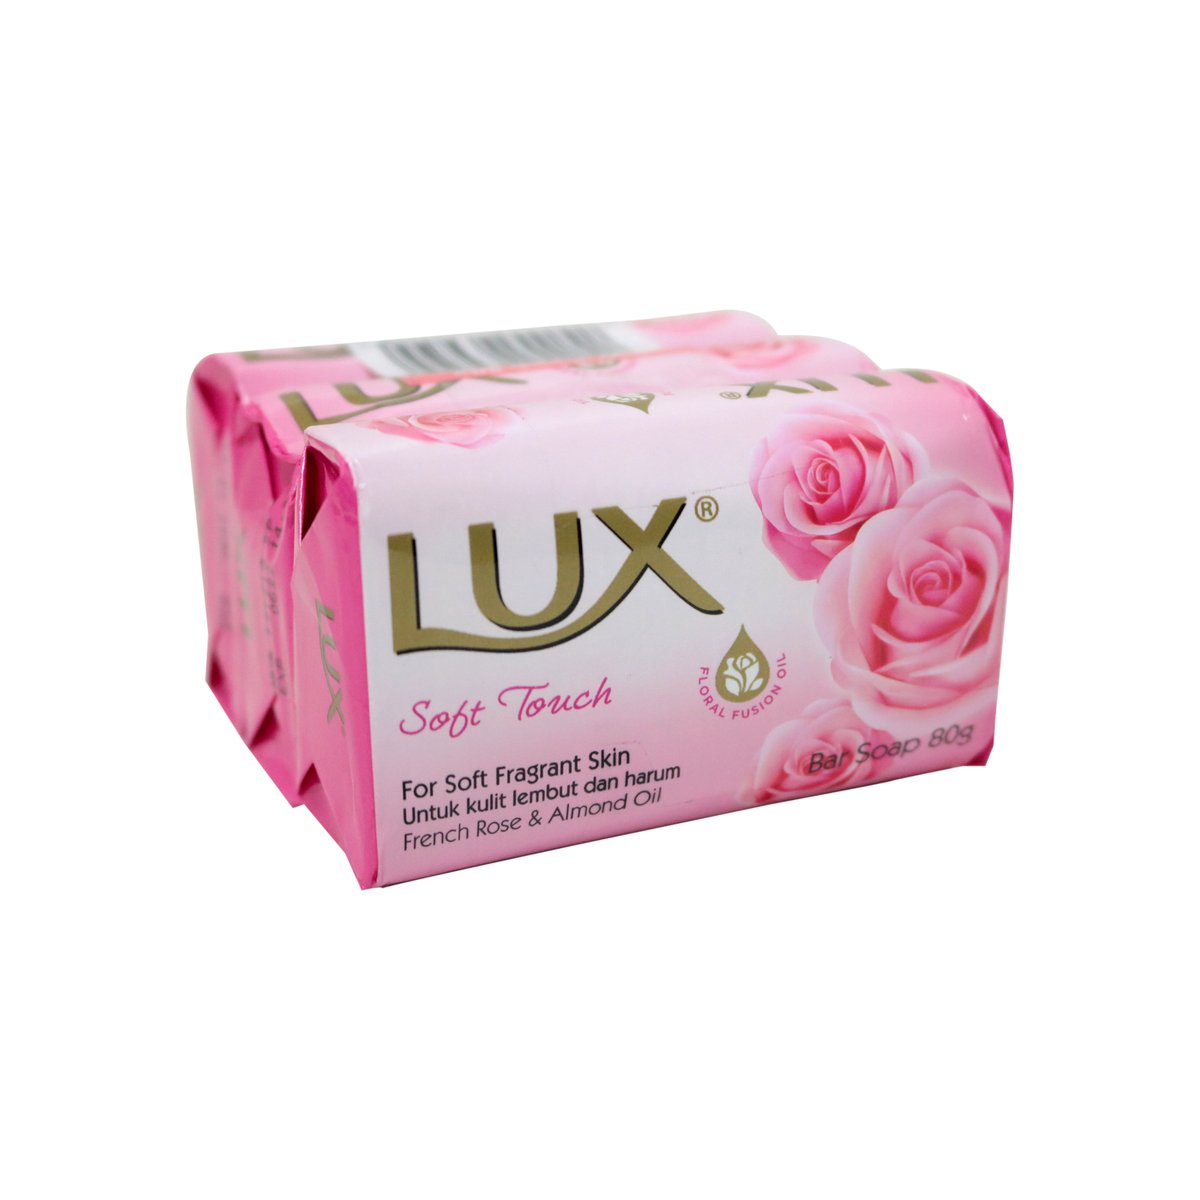 Lux Bath Soap Soft Touch 3x80g